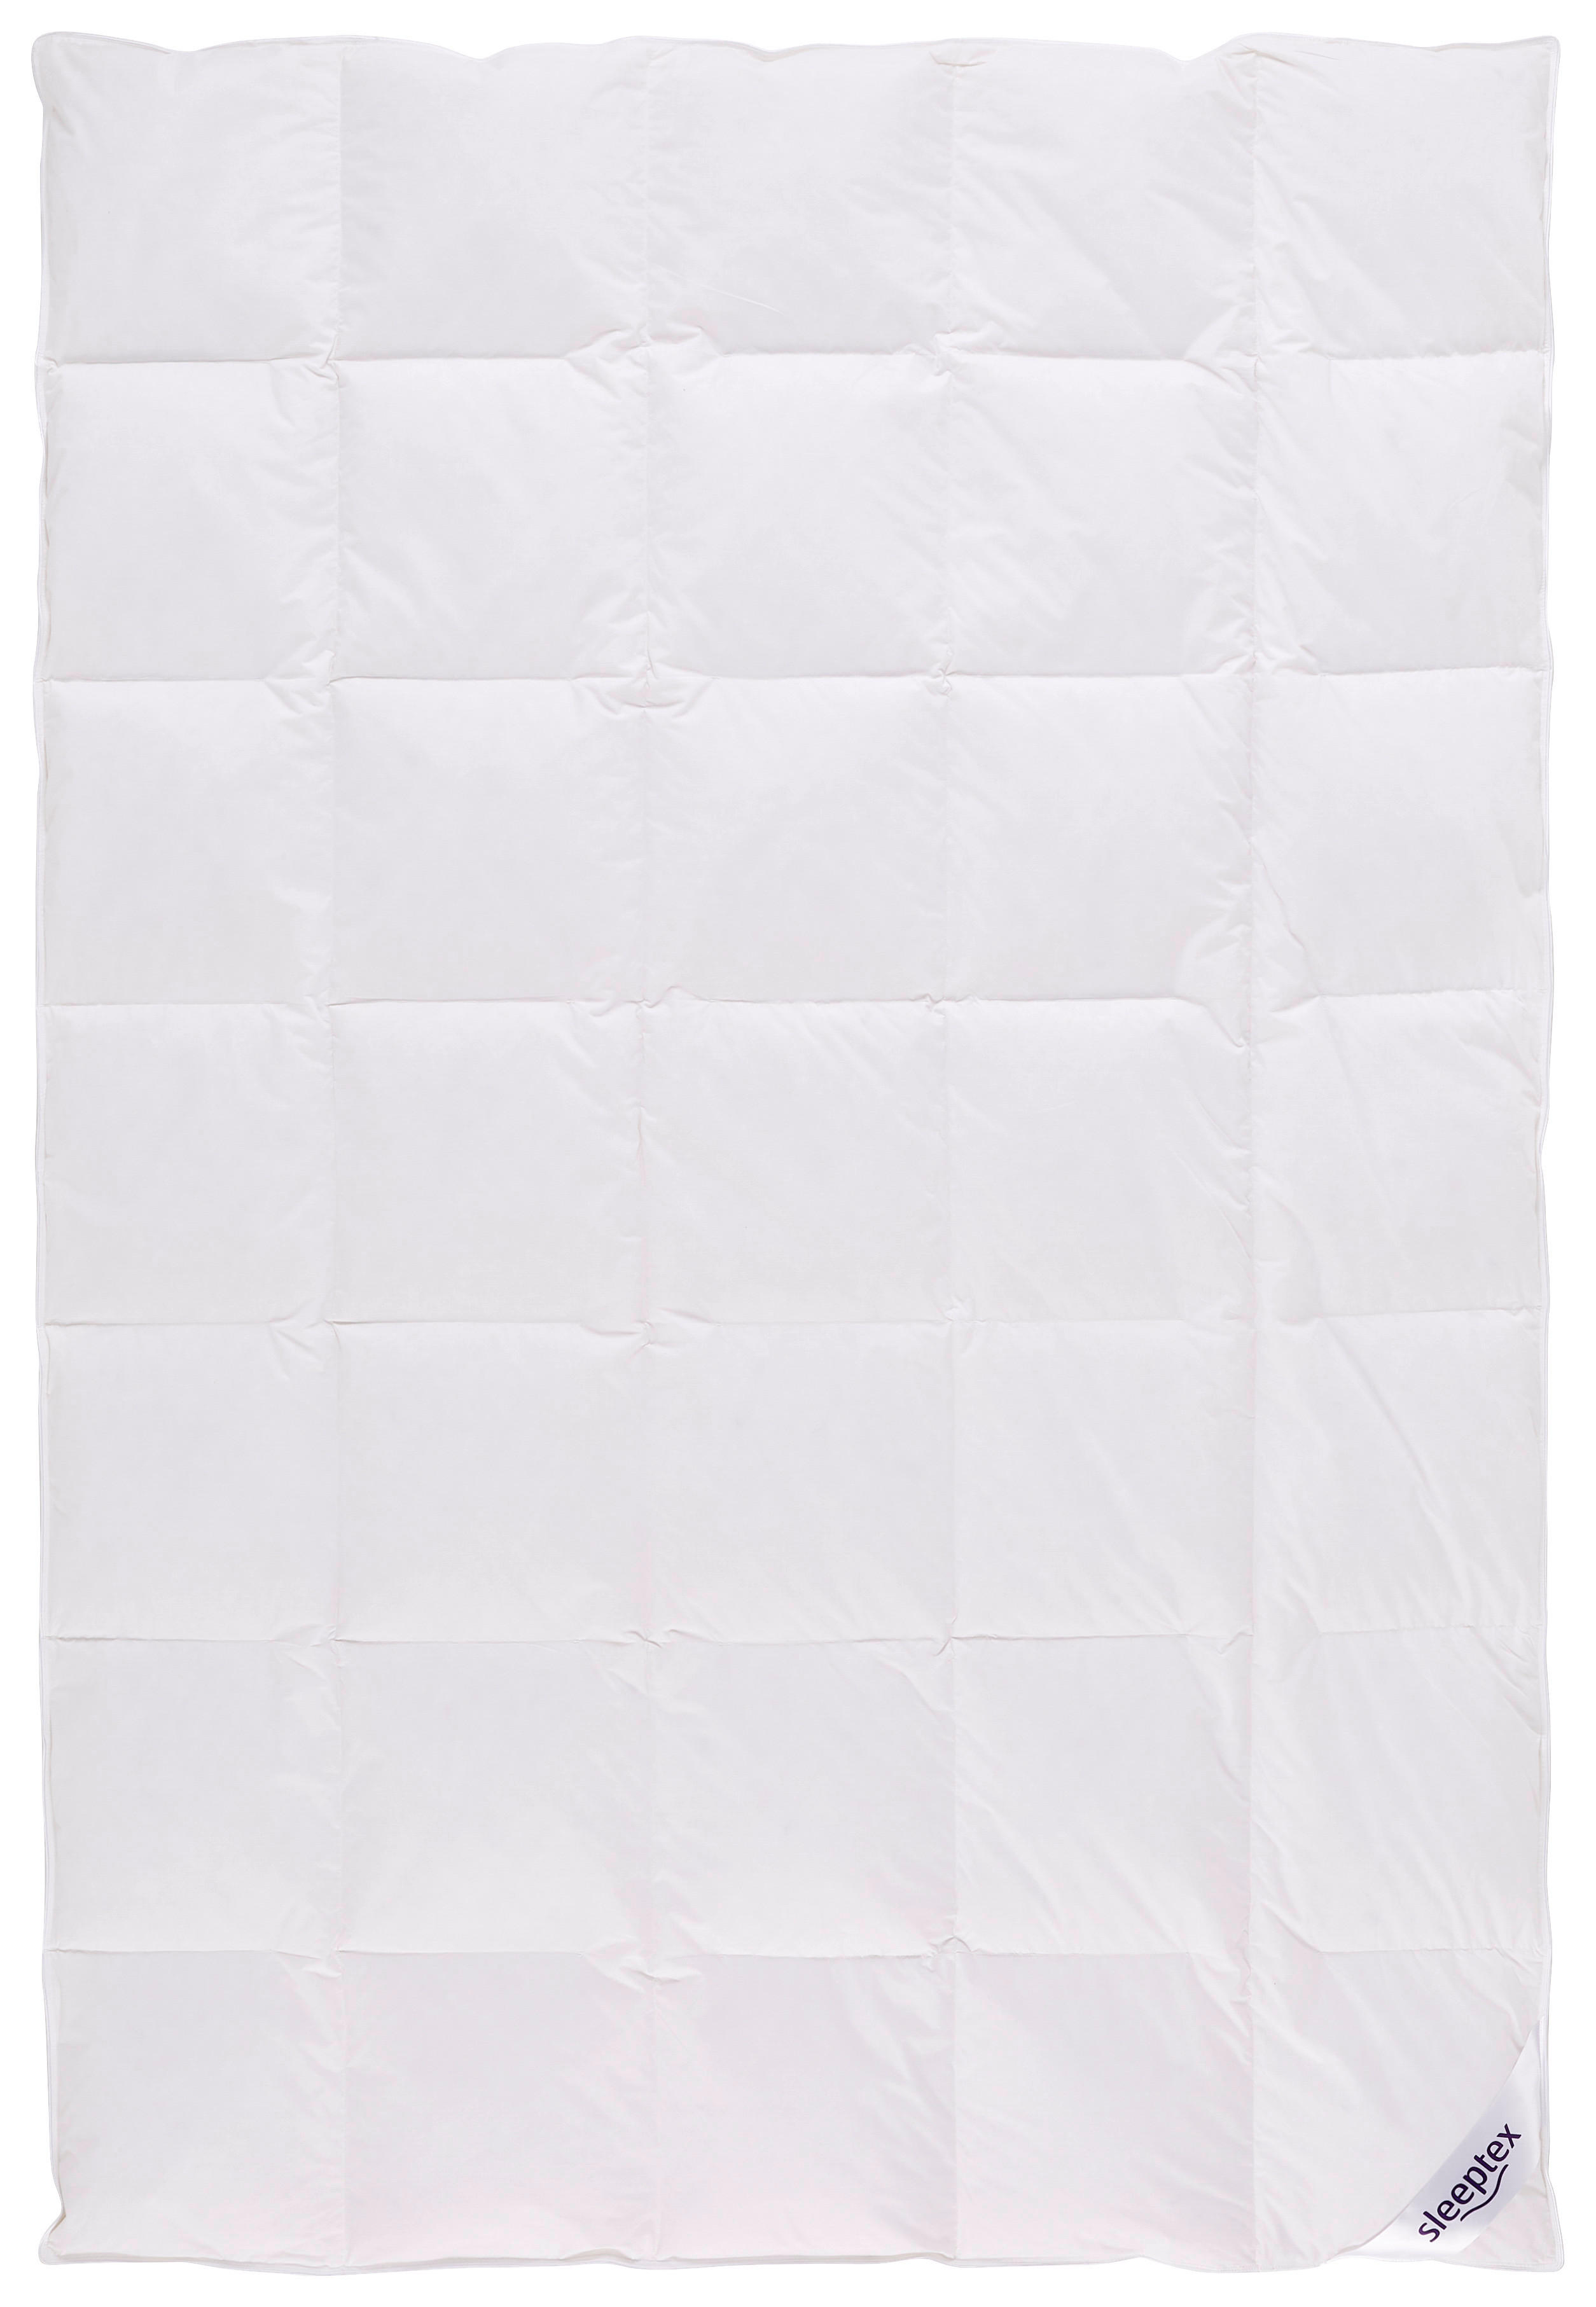 GANZJAHRESBETT   135/200 cm   - Weiß, Basics, Naturmaterialien/Textil (135/200cm) - Sleeptex